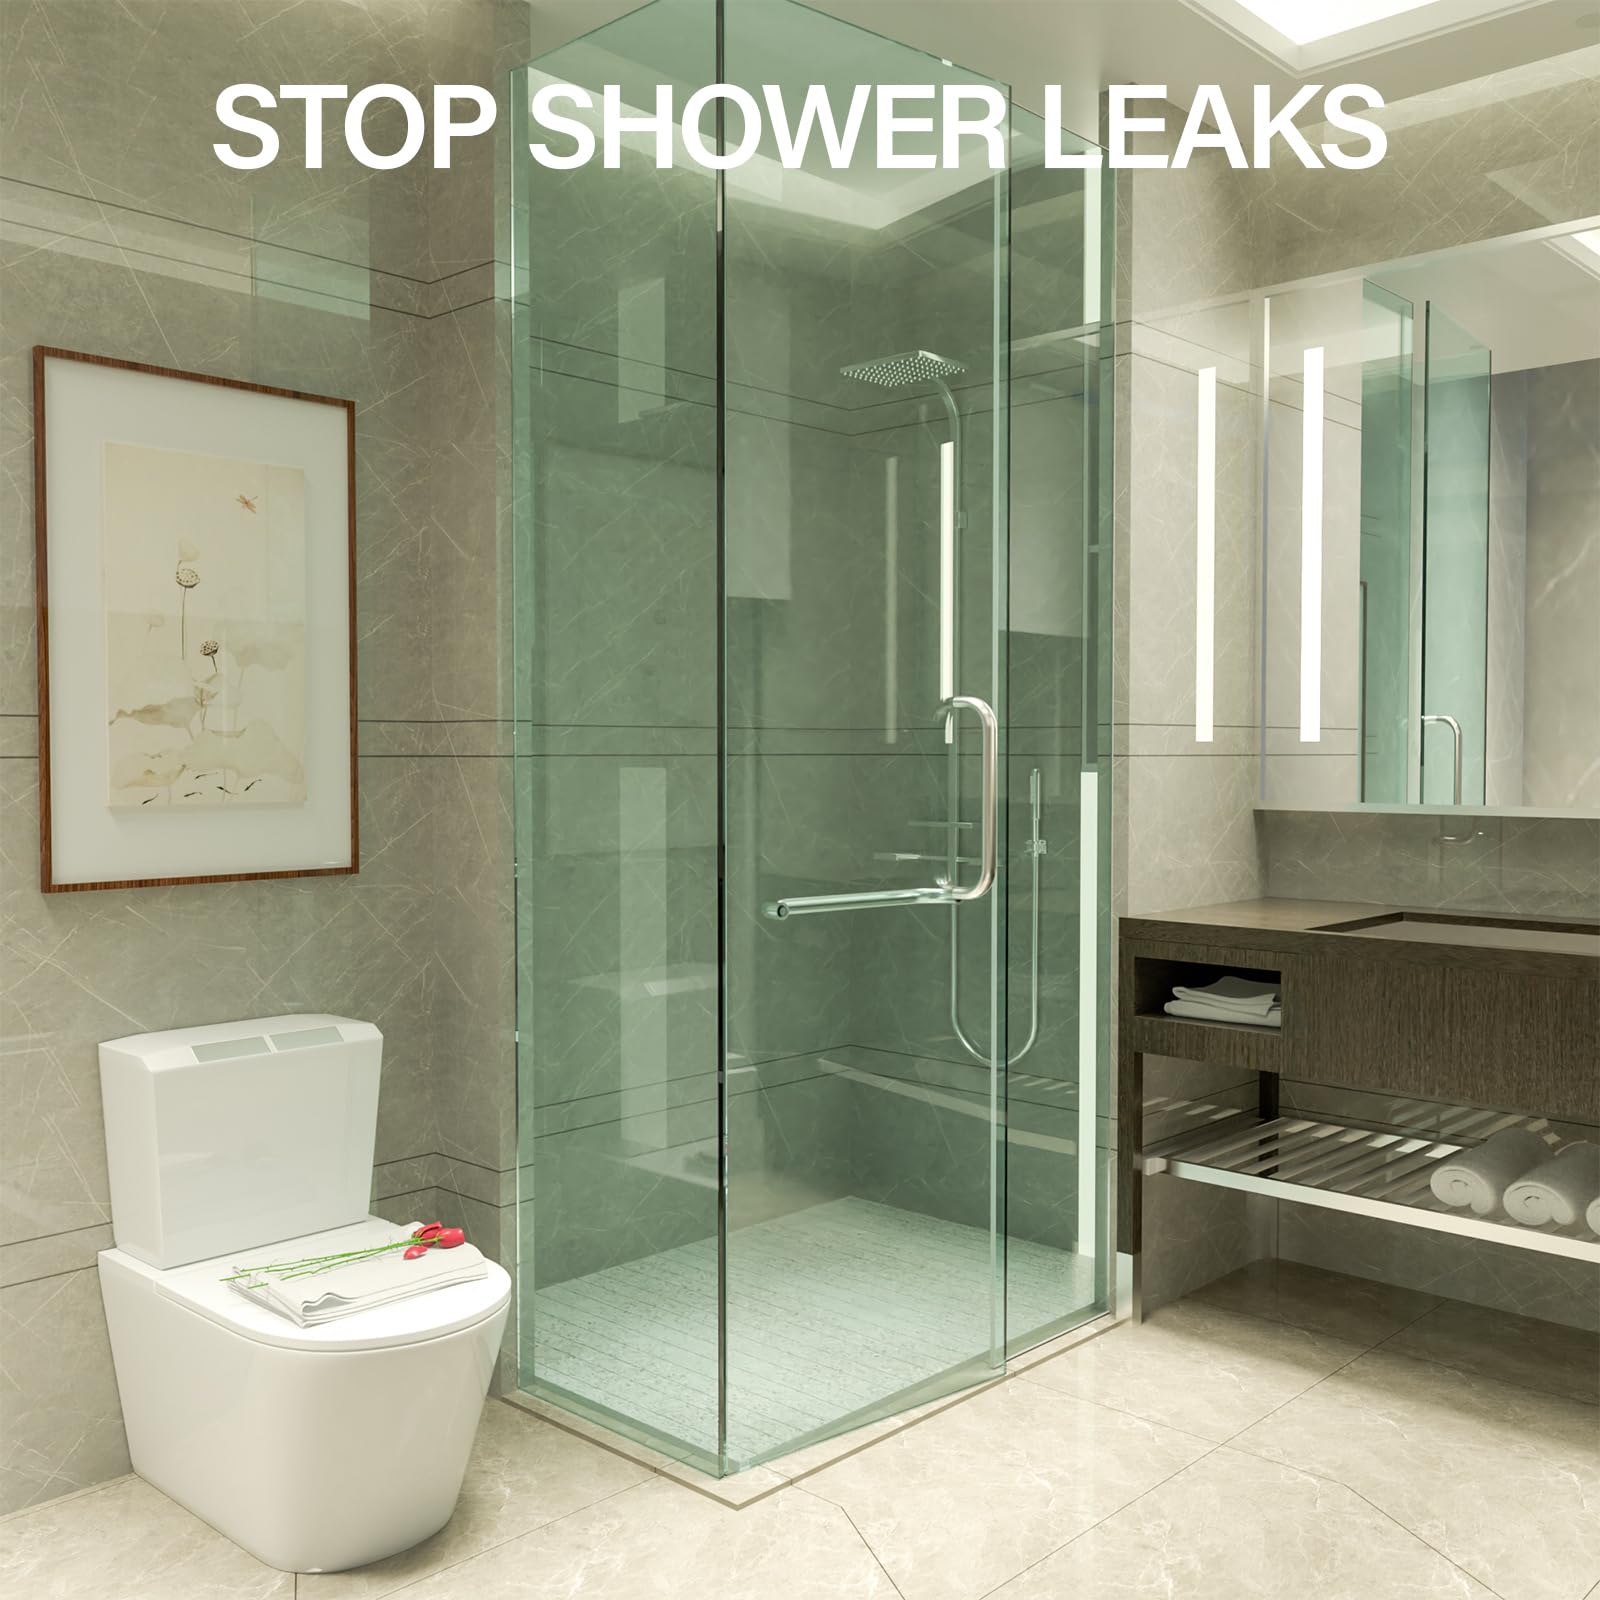 3-Pack 3/8" x 39" Shower Door Bottom Seal - Shower Door Sweep - Frameless Glass Seal Strip - Stop Shower Leaks and Create a Water Barrier, 10MM